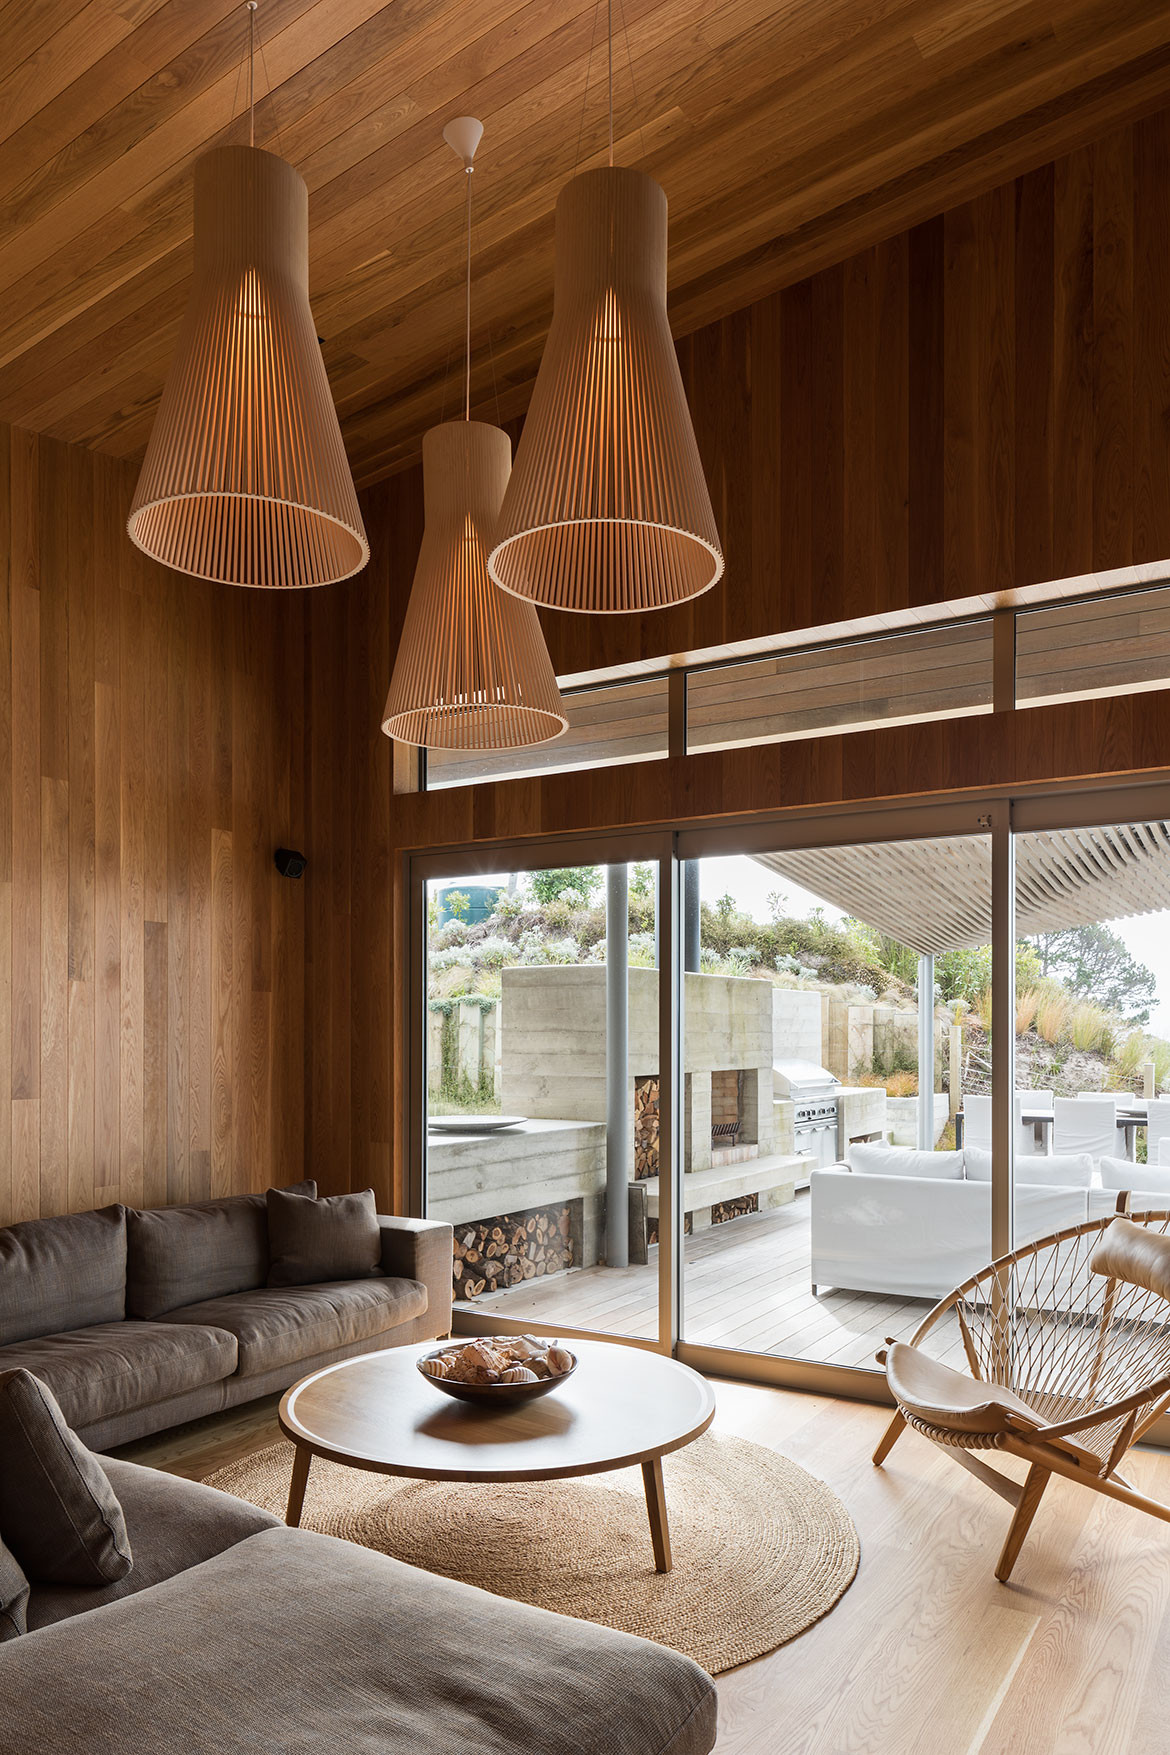 Hahei House Studio2 Architects living space